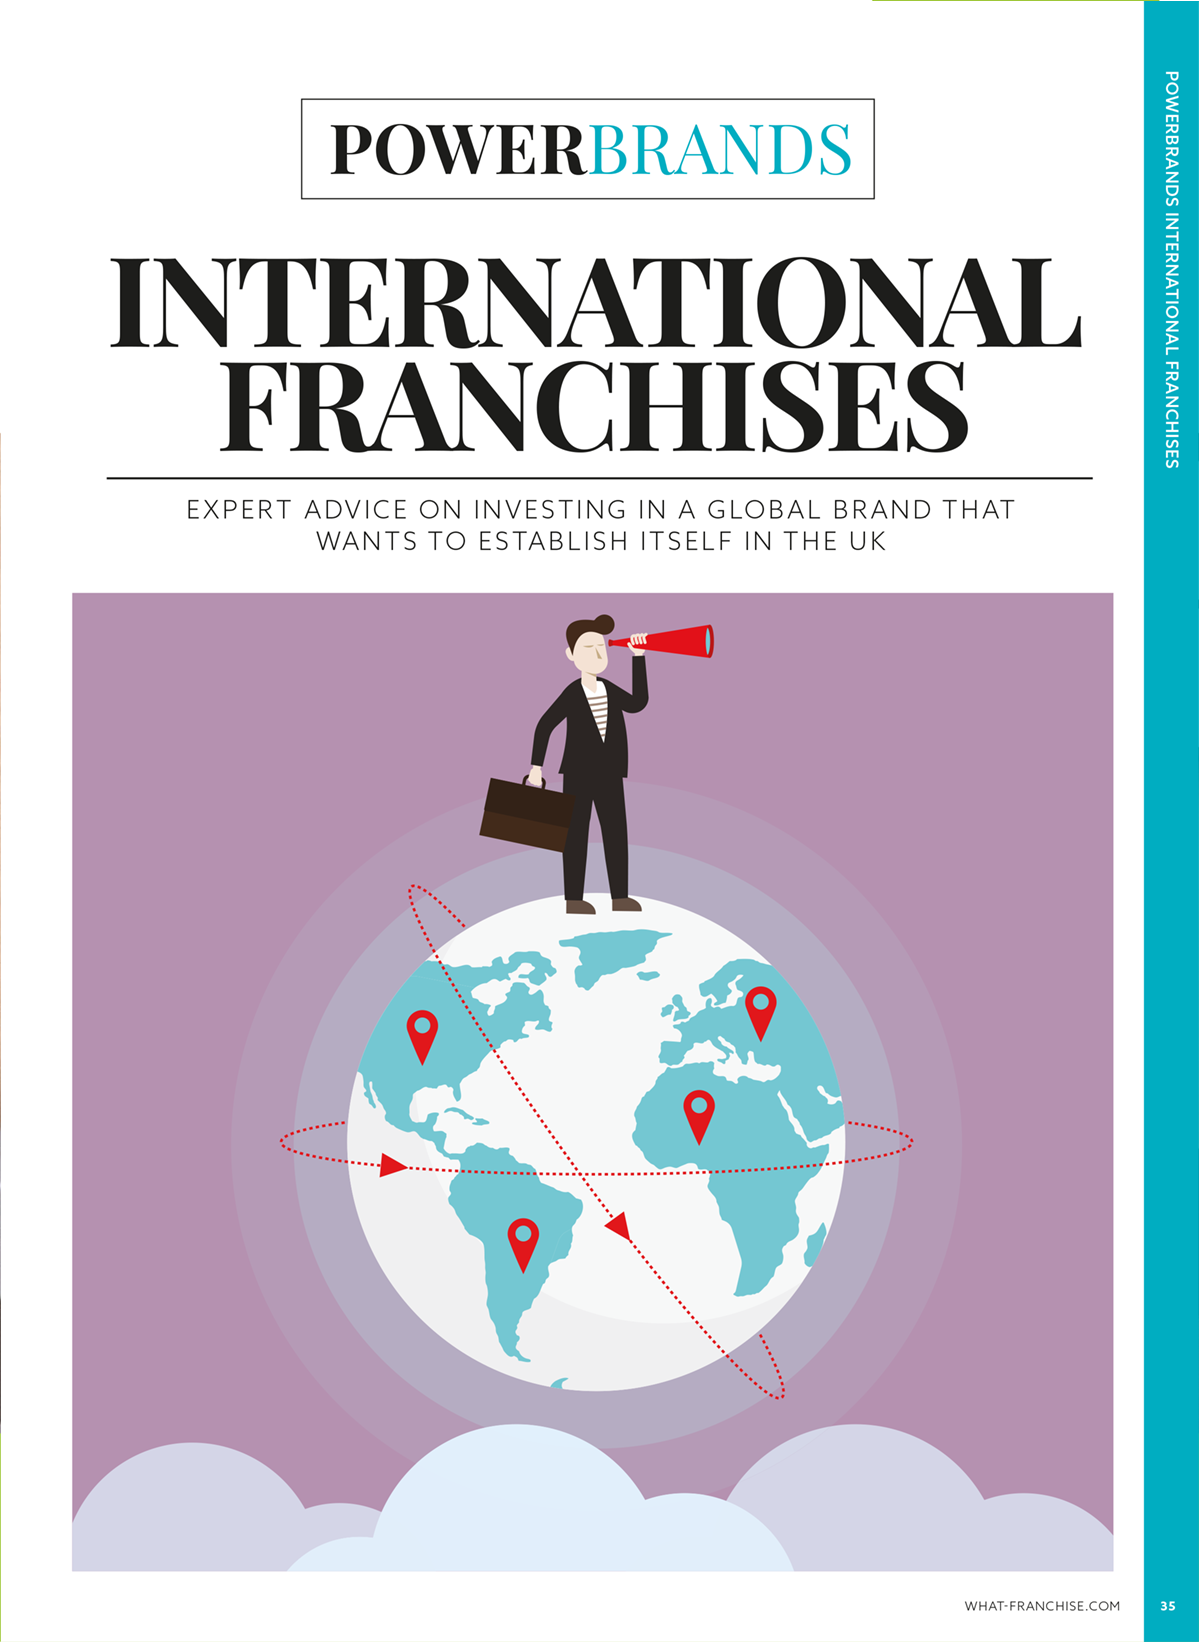 Powerbrands: International Franchises